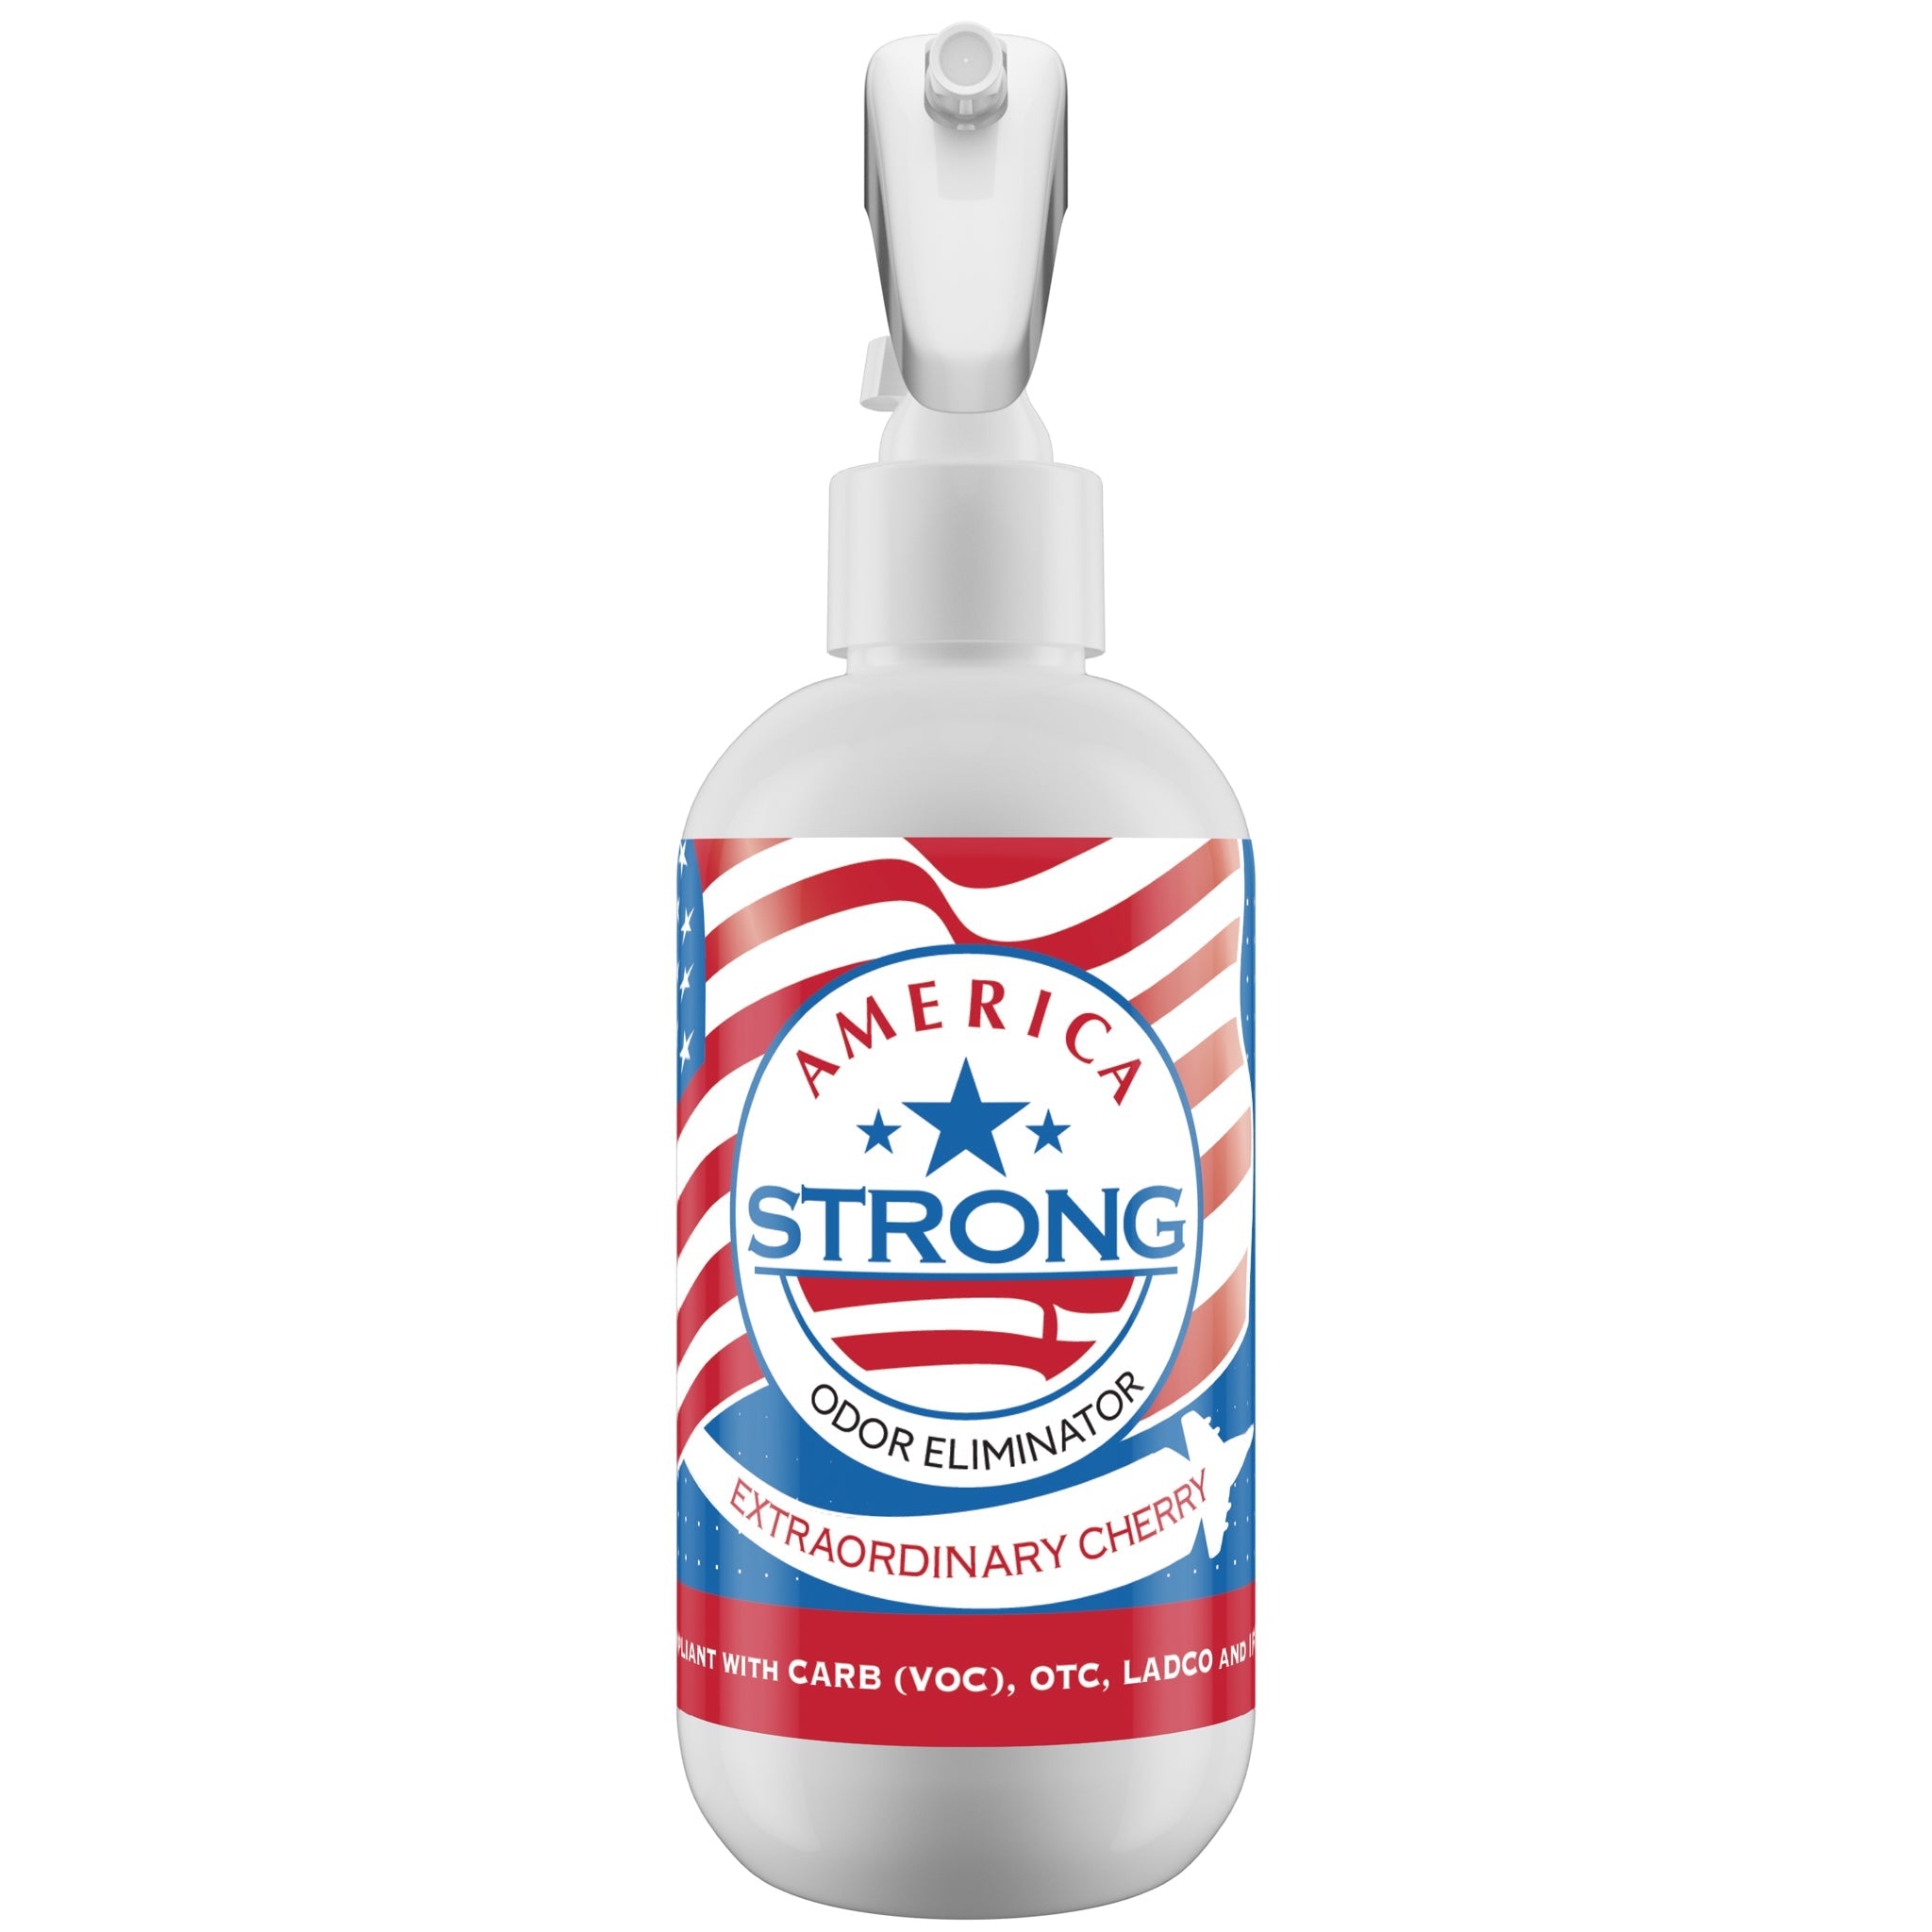 America Strong Odor Eliminator - Extraordinary Cherry Scent Size: 8.0oz